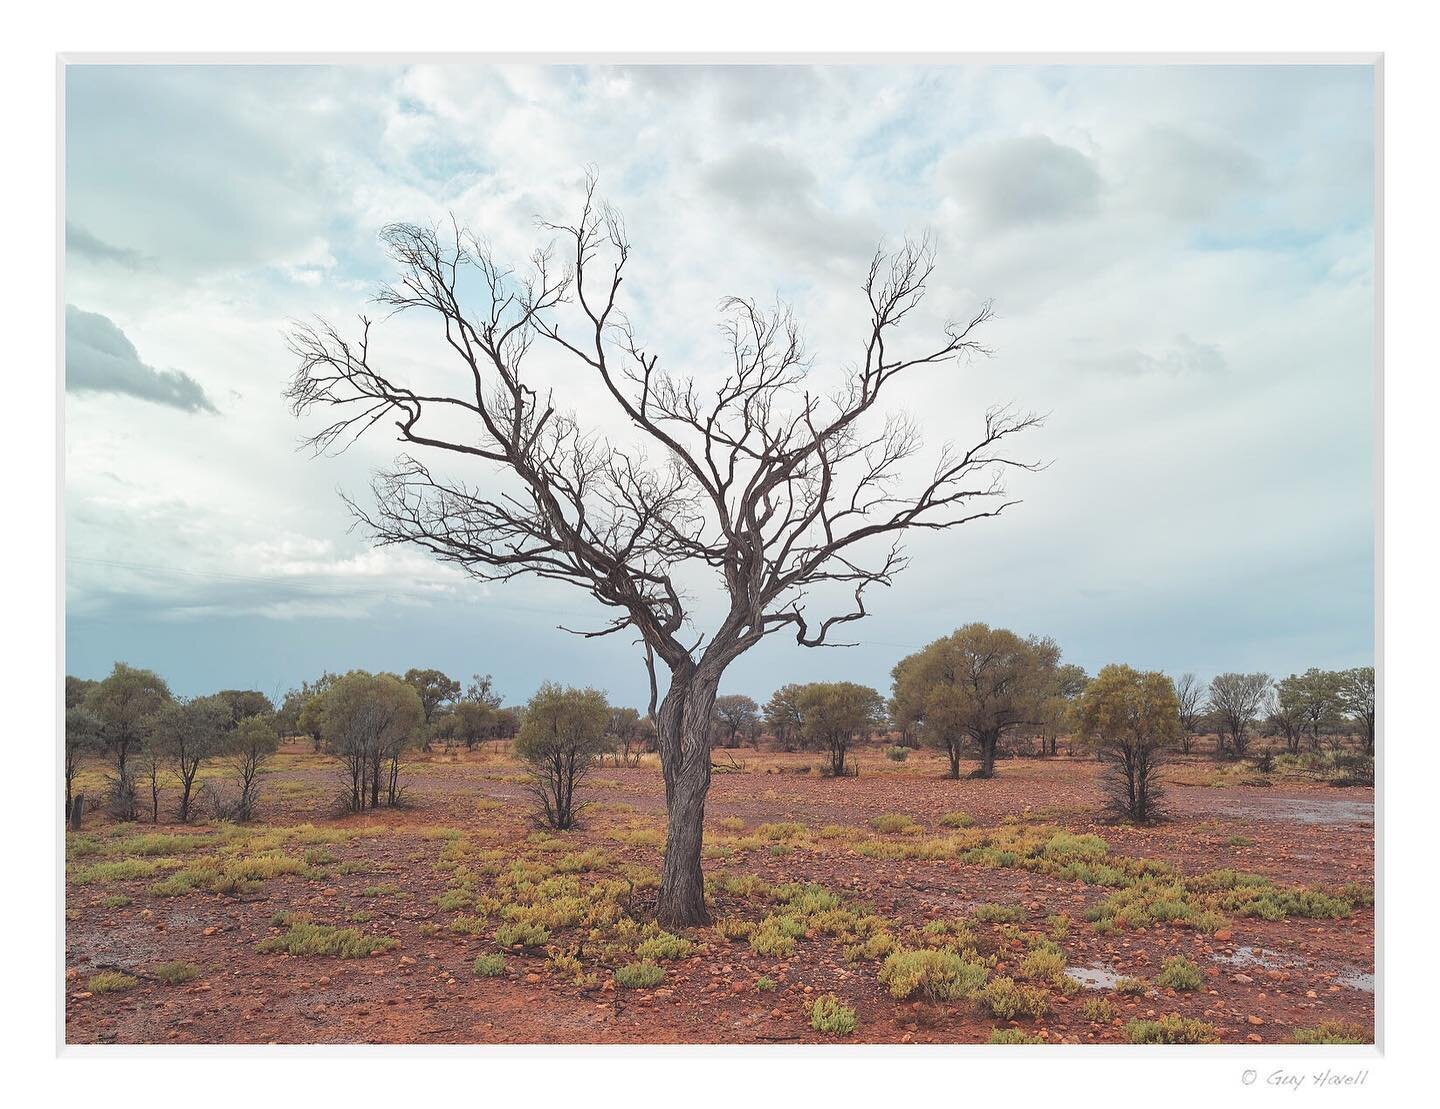 Quilpie, Queensland. 

#australia #qld #outback #outbackaustralia #travel #roadtrip #naturephotography #lonetree #landscapephotography #australiantraveller #queenslanders  #trees #mediumformat